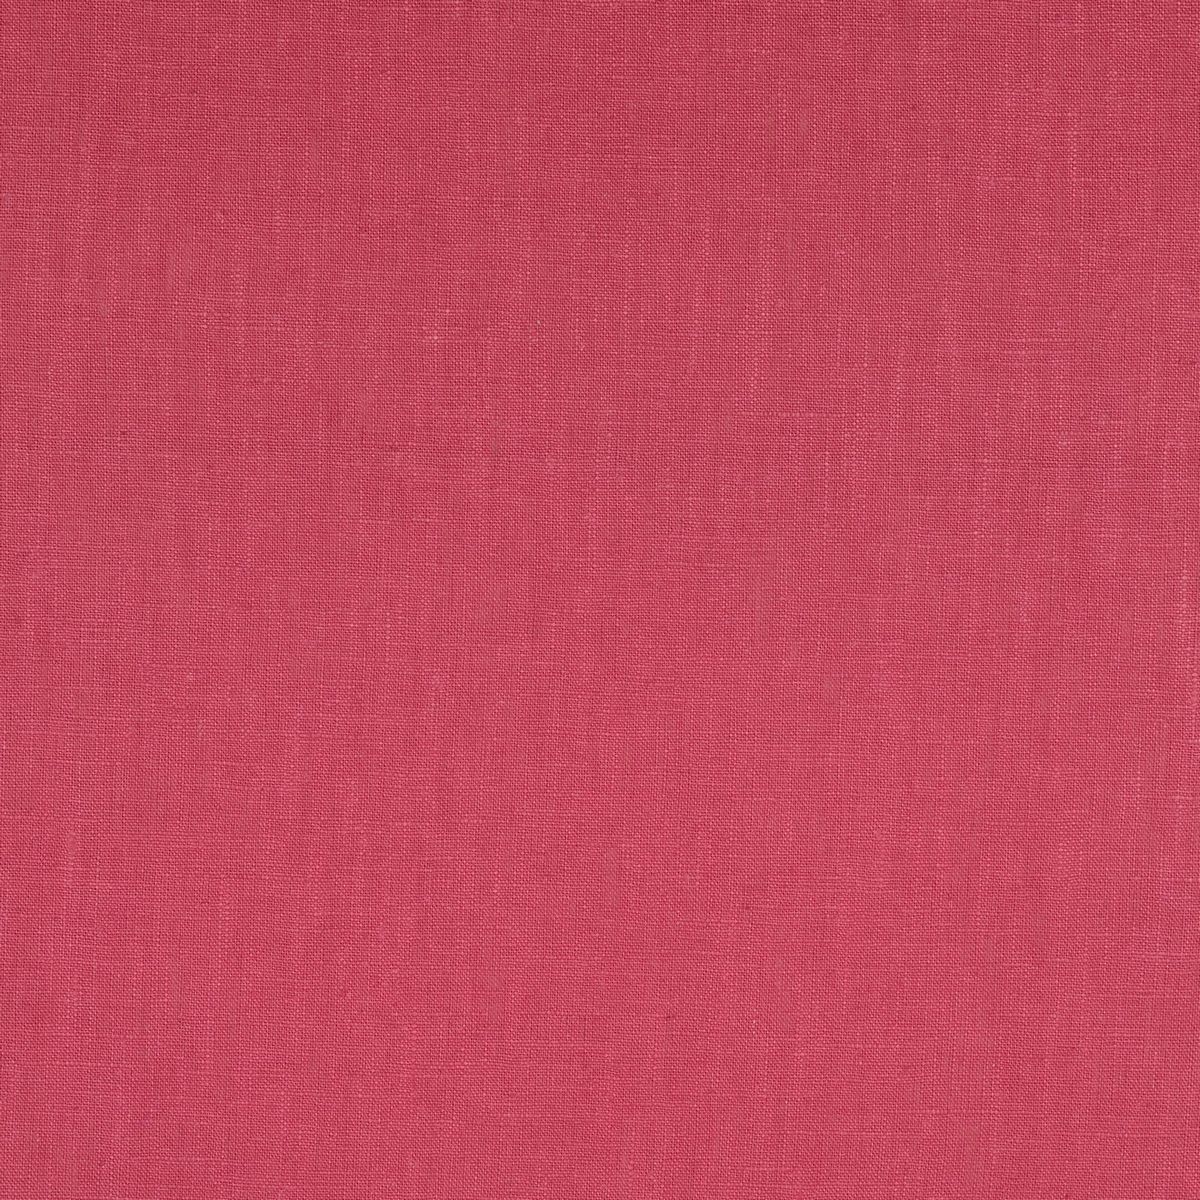 Rose Fabric by Chatham Glyn